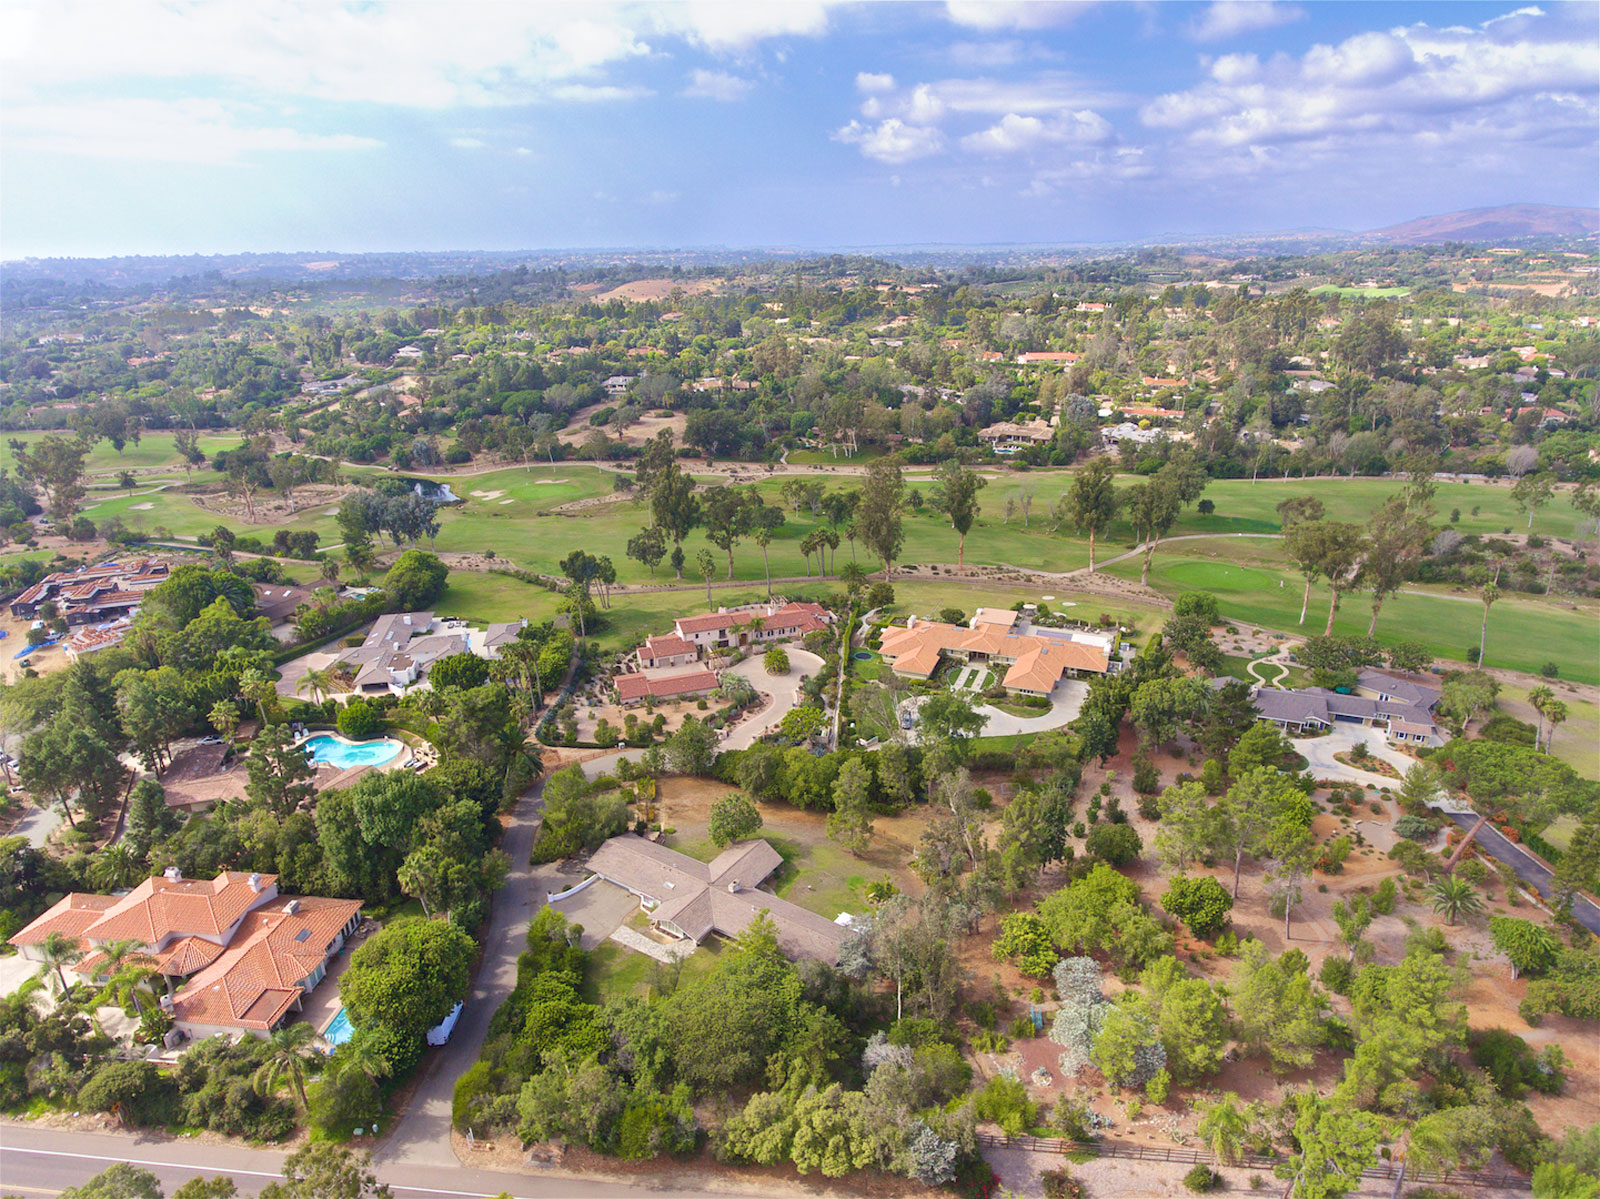 Rancho Santa Fe Luxury Real Estate For Sale